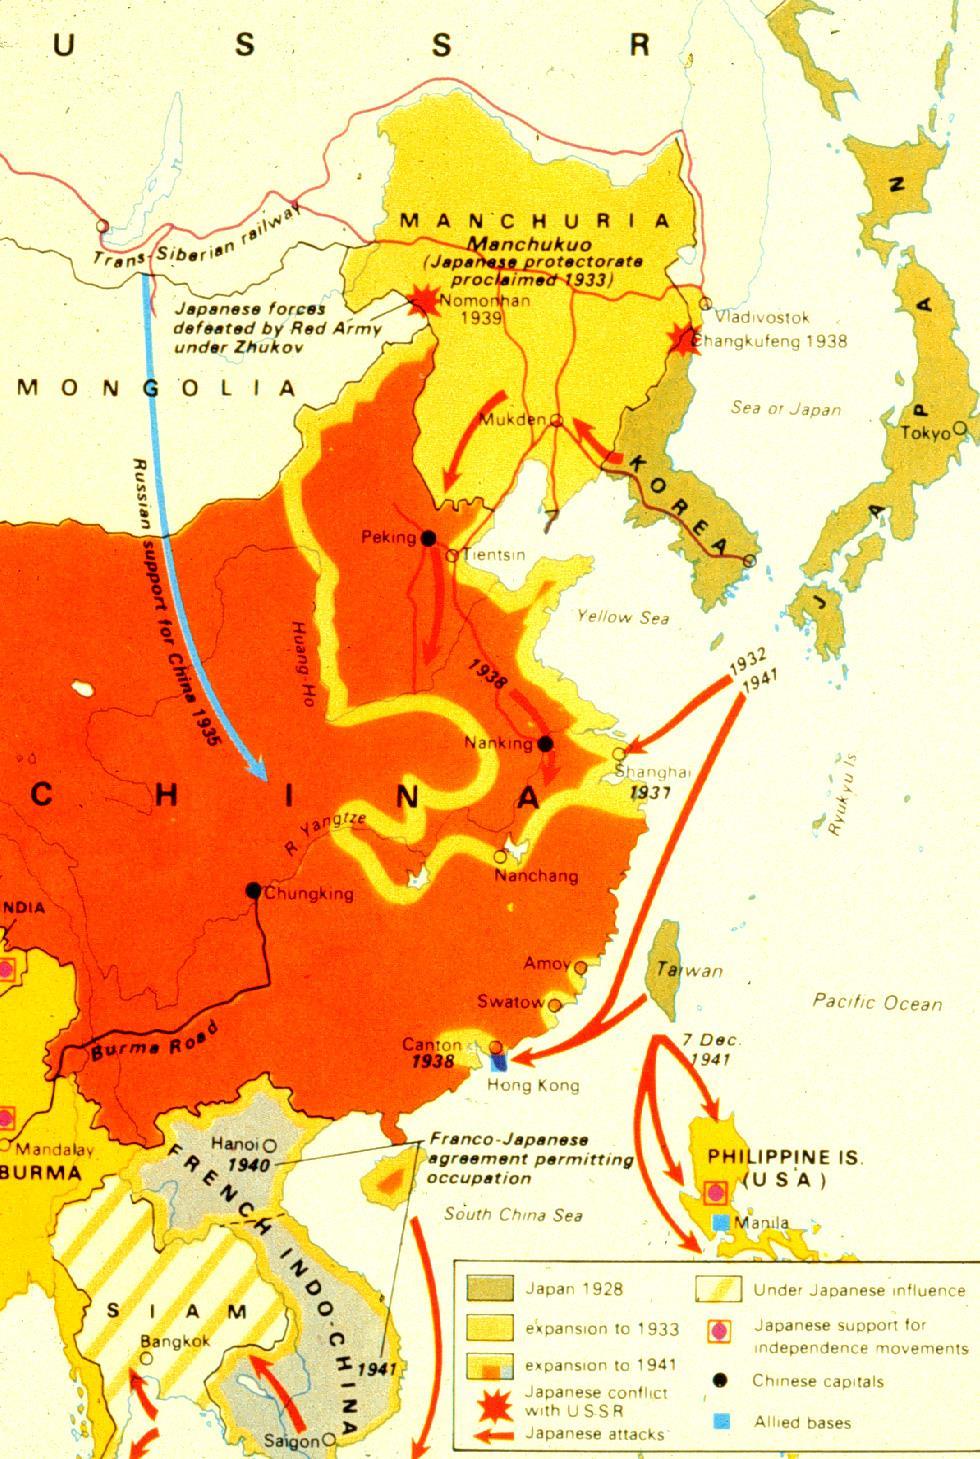 Hideki Tojo) sought total control of Pacific (resources)